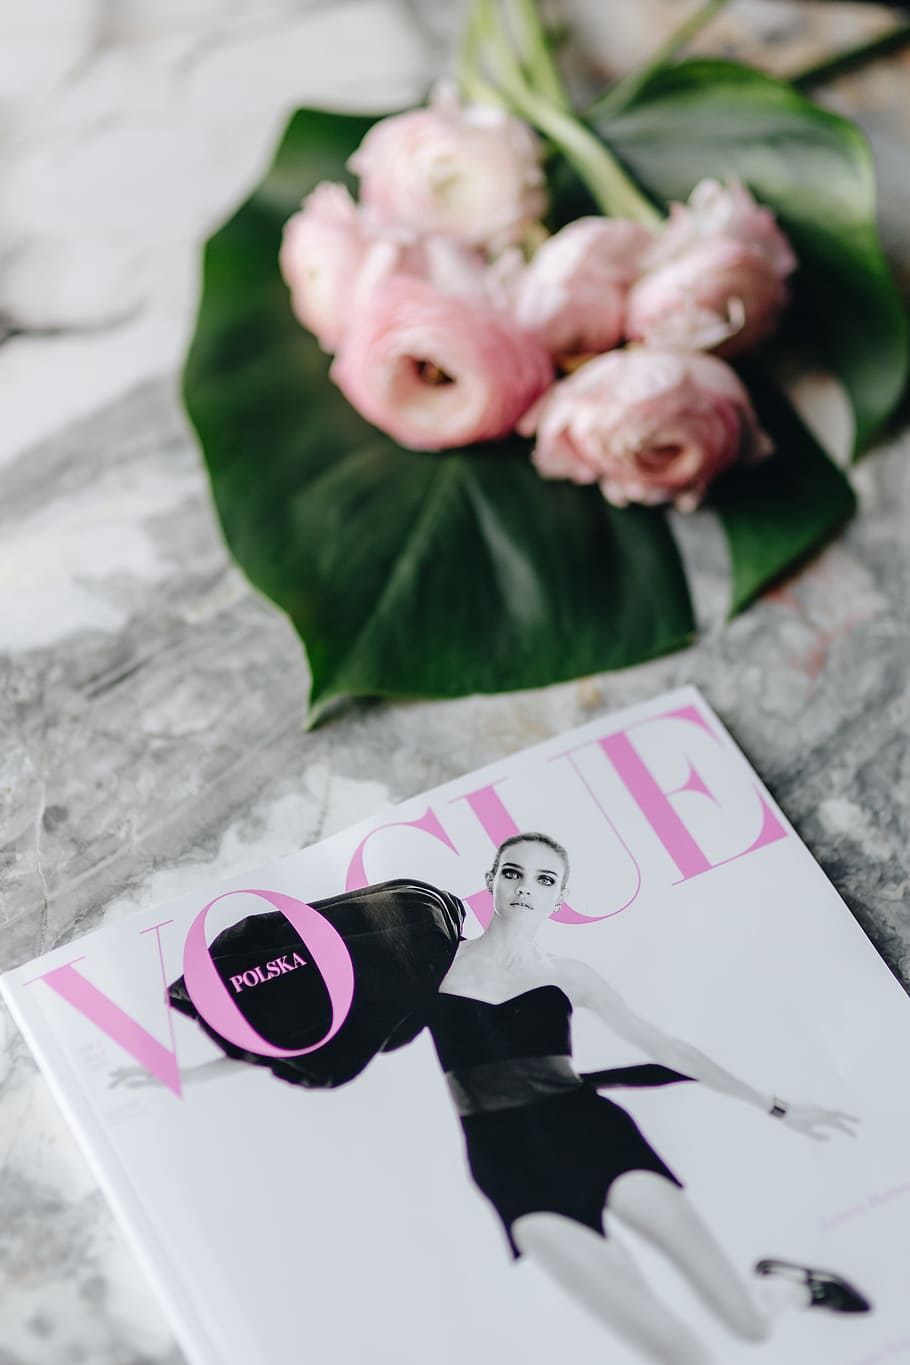 vogue poland 2 2018, &, lovely, buttercup flowers, flora, linda, revista, floral, moda, rosa